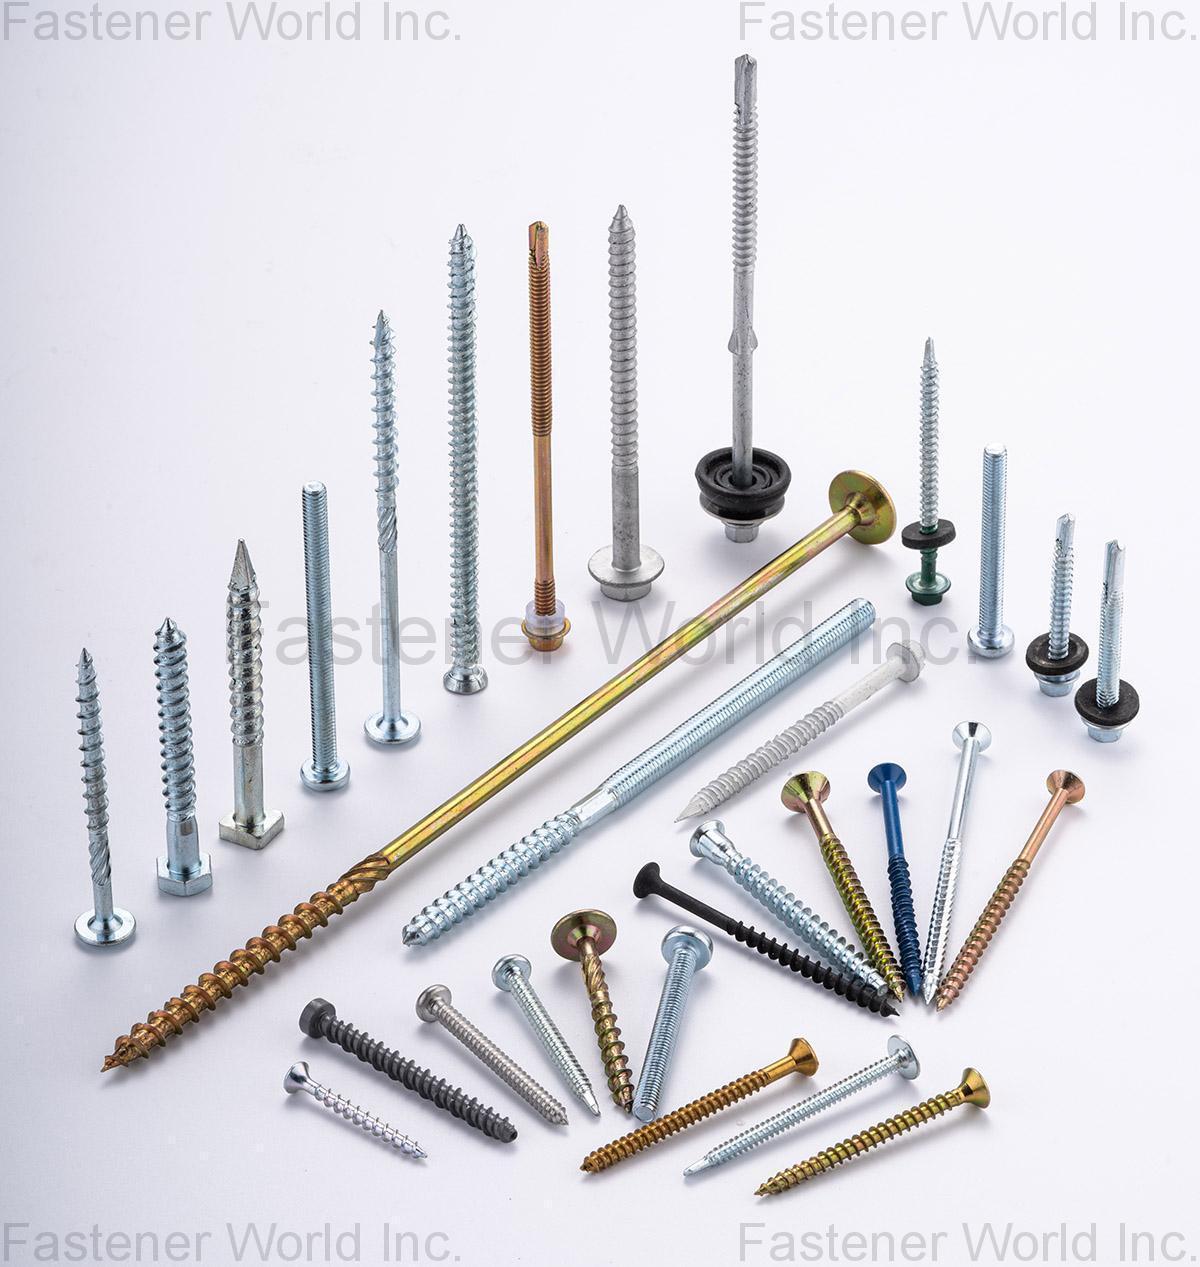 JINGLE-TECH FASTENERS CO., LTD. , Chipboard Screws, Drywall Screws, Timber Screws, Self-drilling Screws, Self-tapping Screws, Concrete Screws, Wood Screws